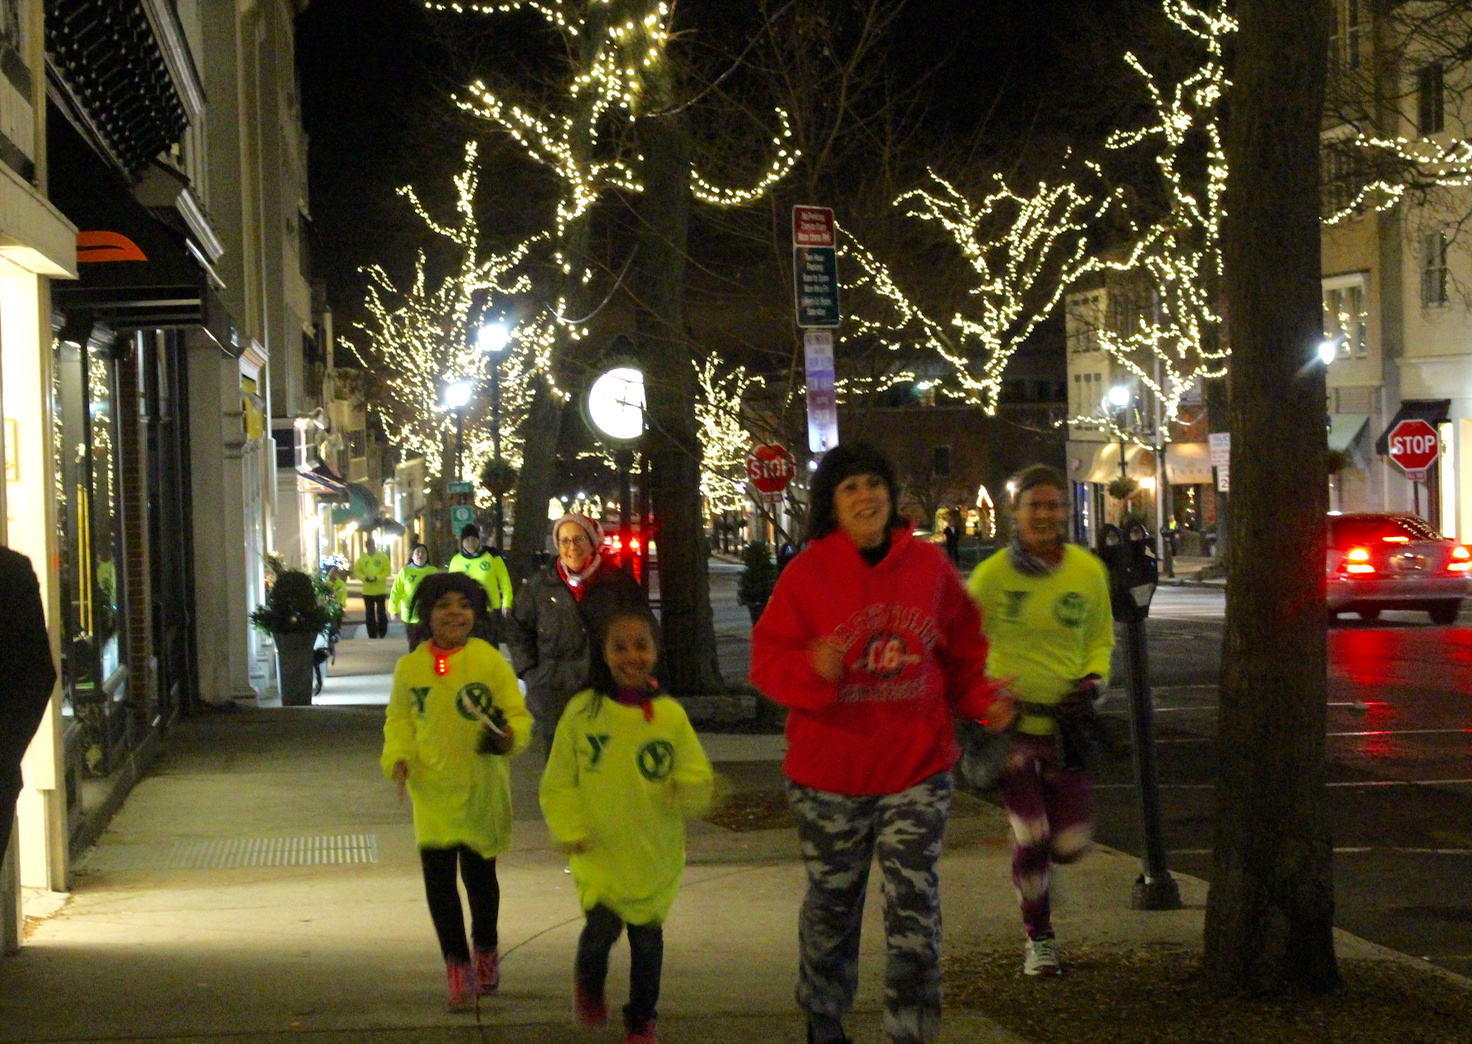 New Year's eve fun run/walk on Greenwich Ave.